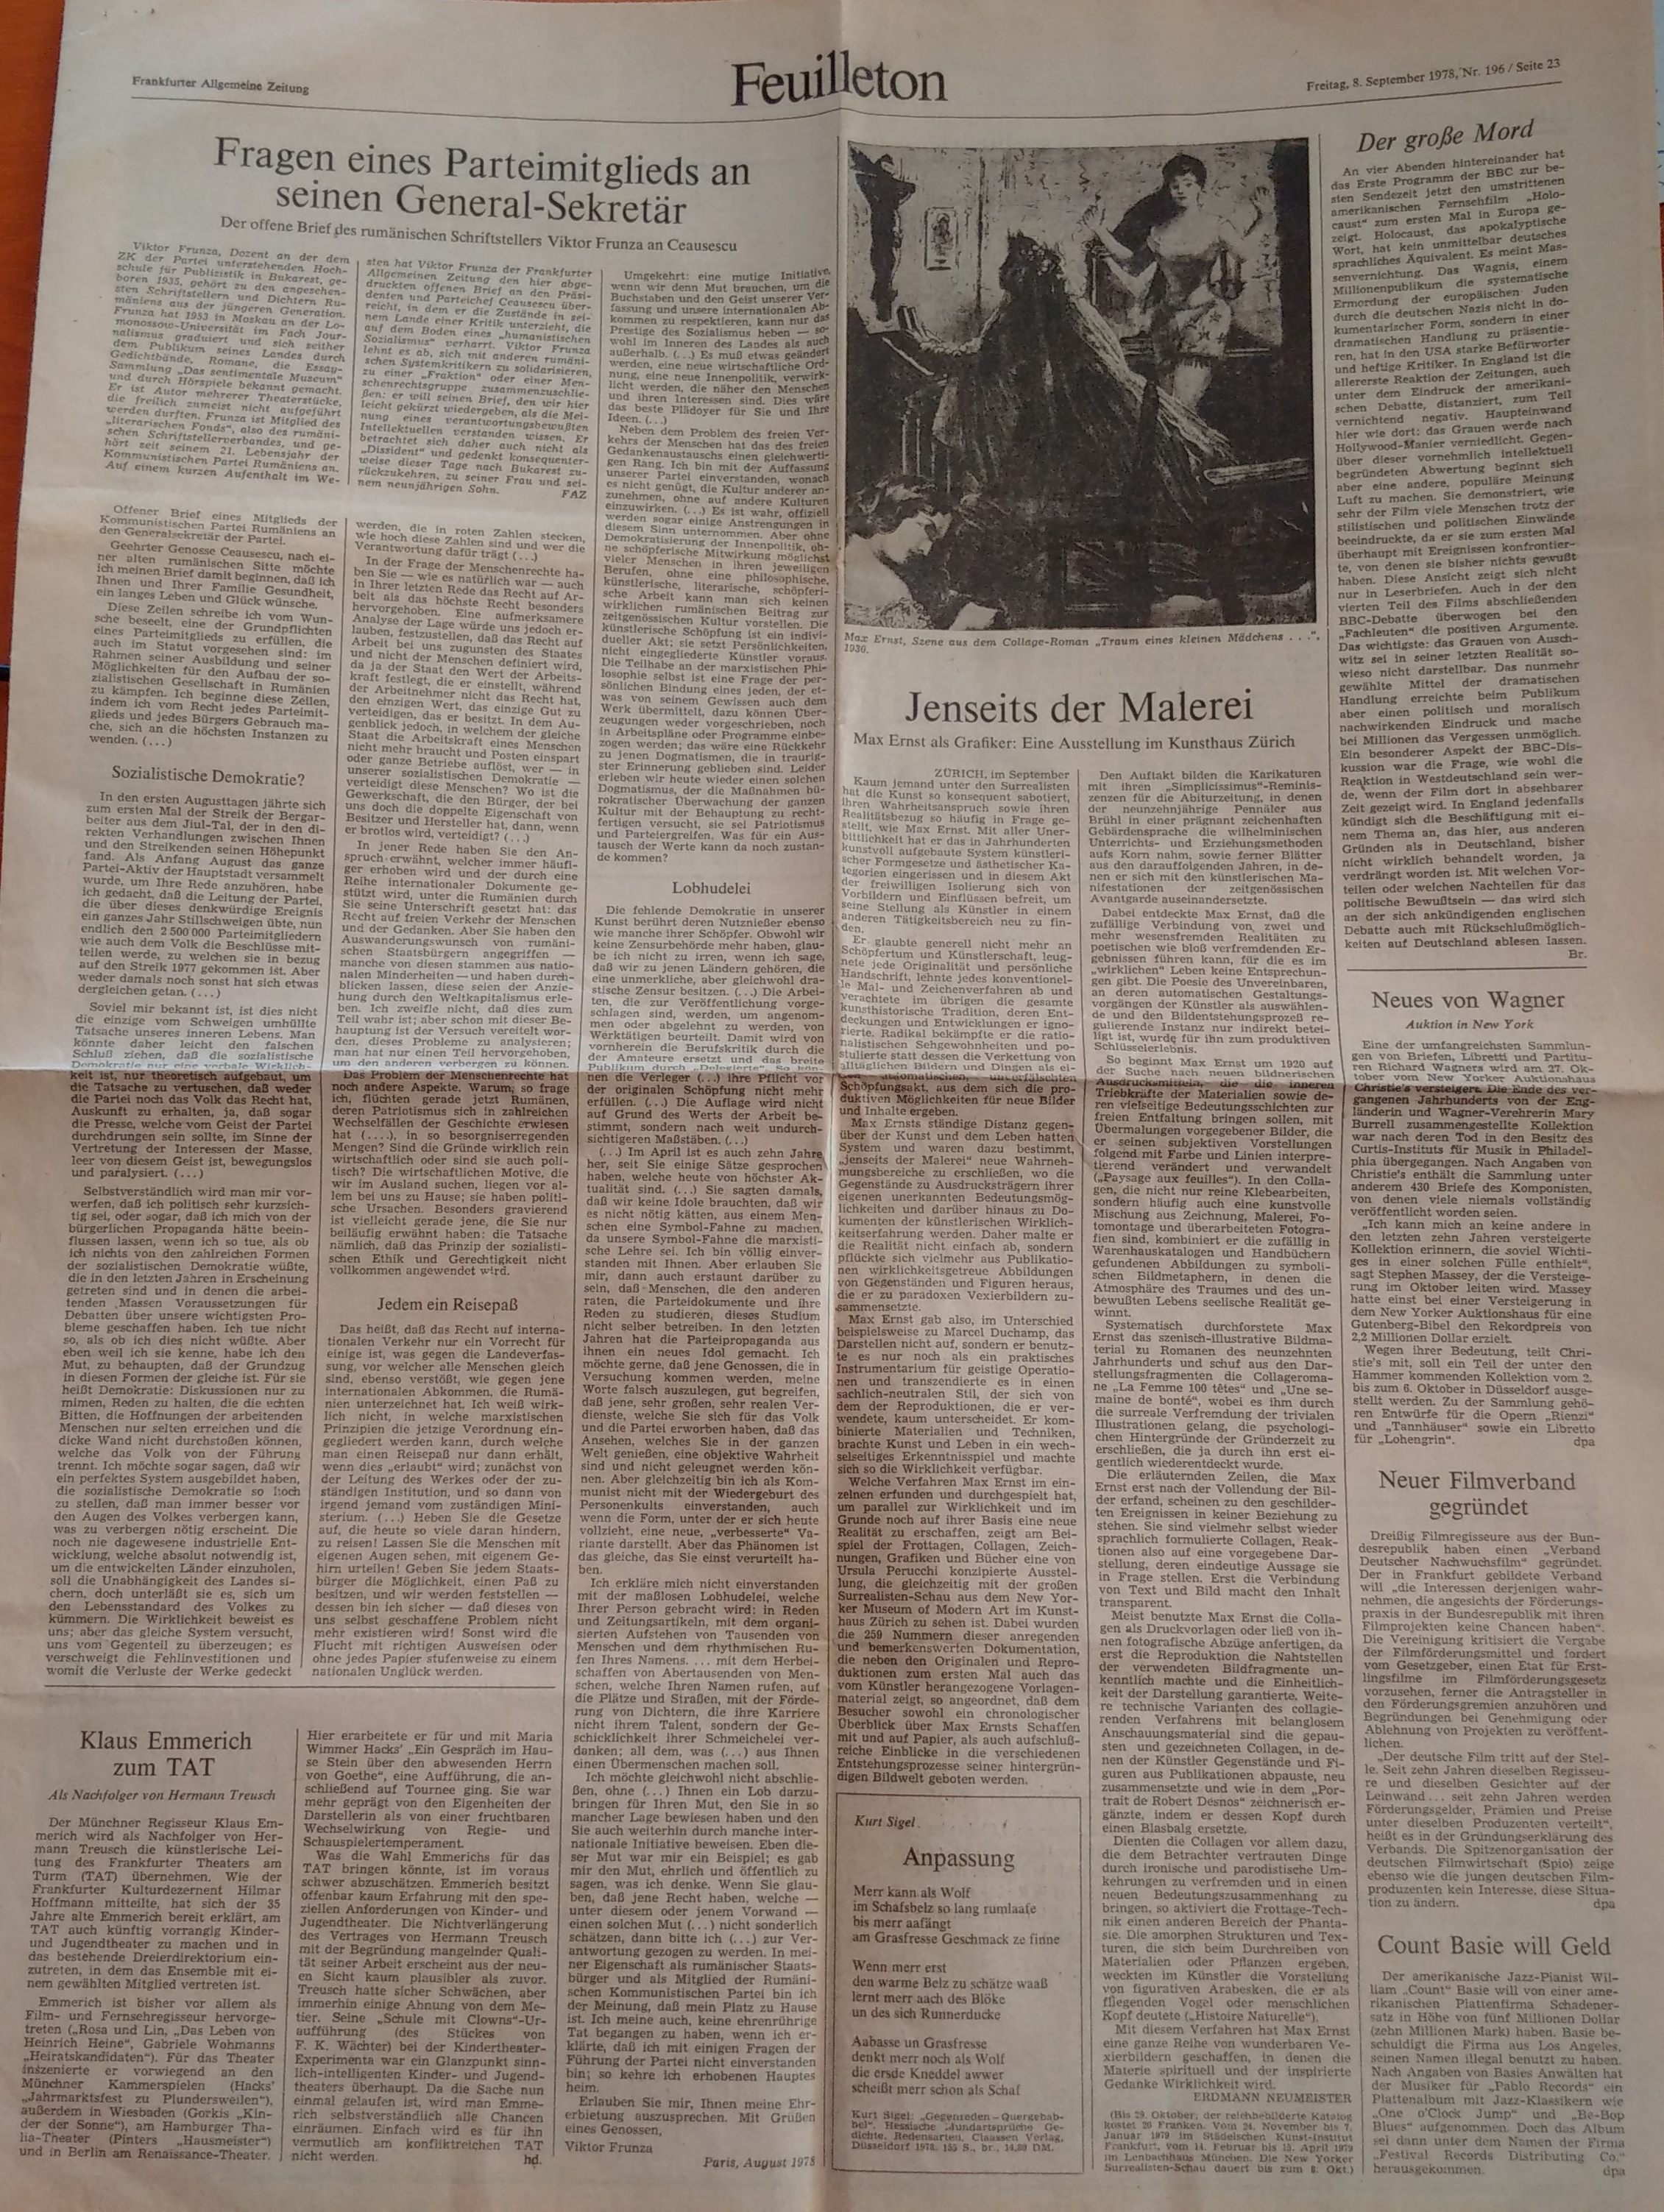 Article in FAZ about Victor Frunză's letter to Ceaușescu